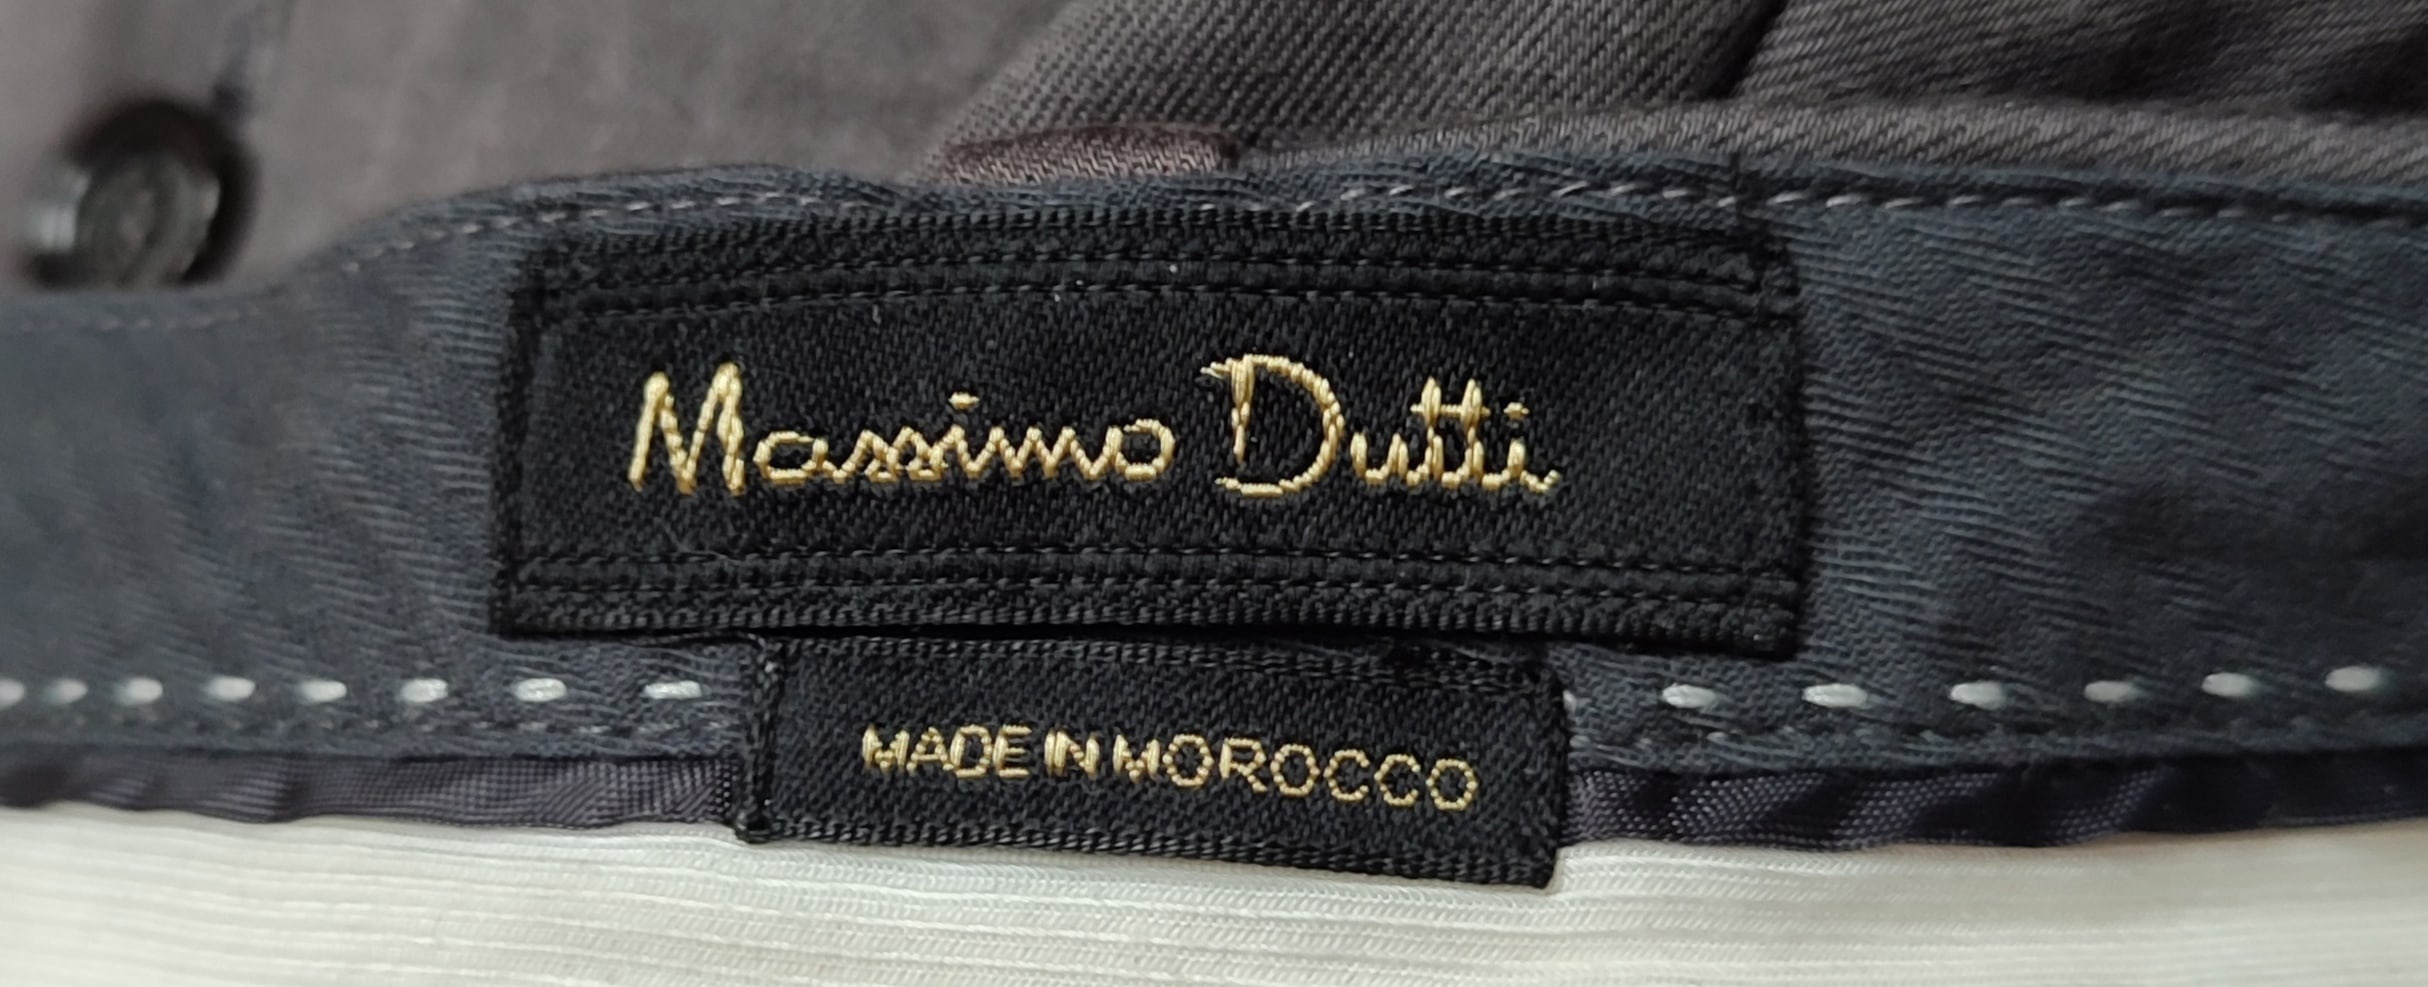 Брюки Massimo Dutti смотреть фото